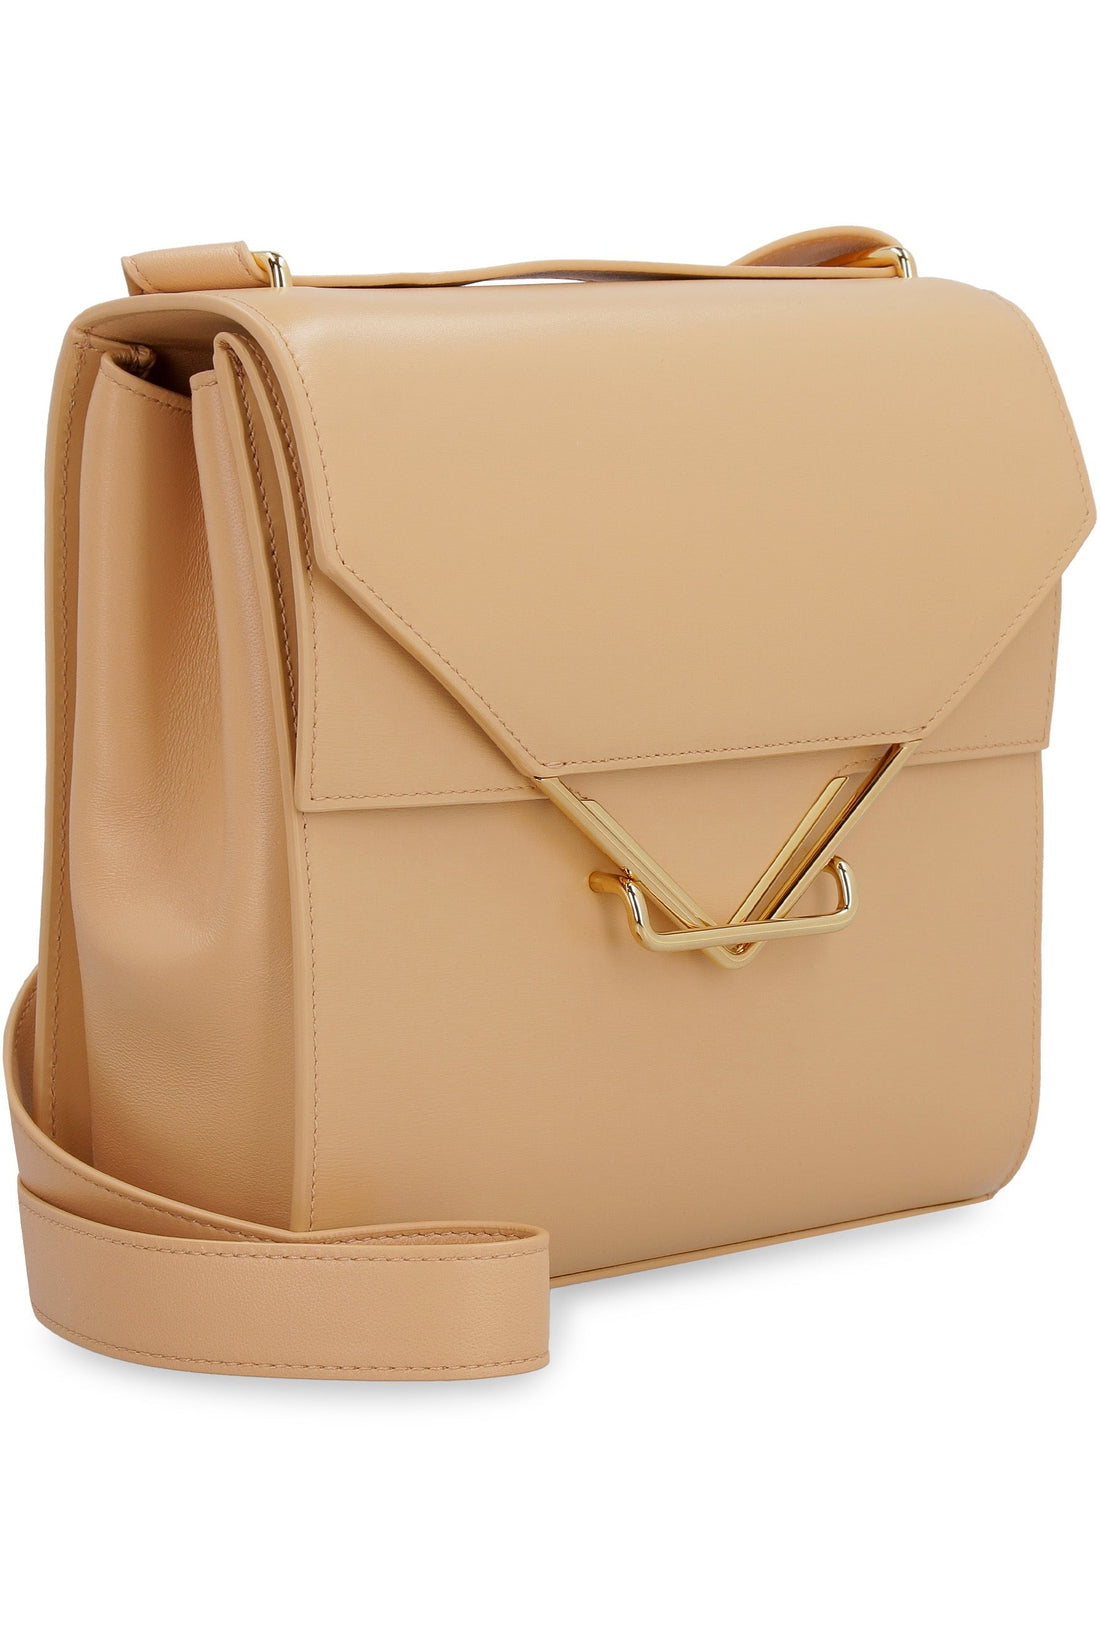 Bottega Veneta-OUTLET-SALE-The Clip leather crossbody bag-ARCHIVIST